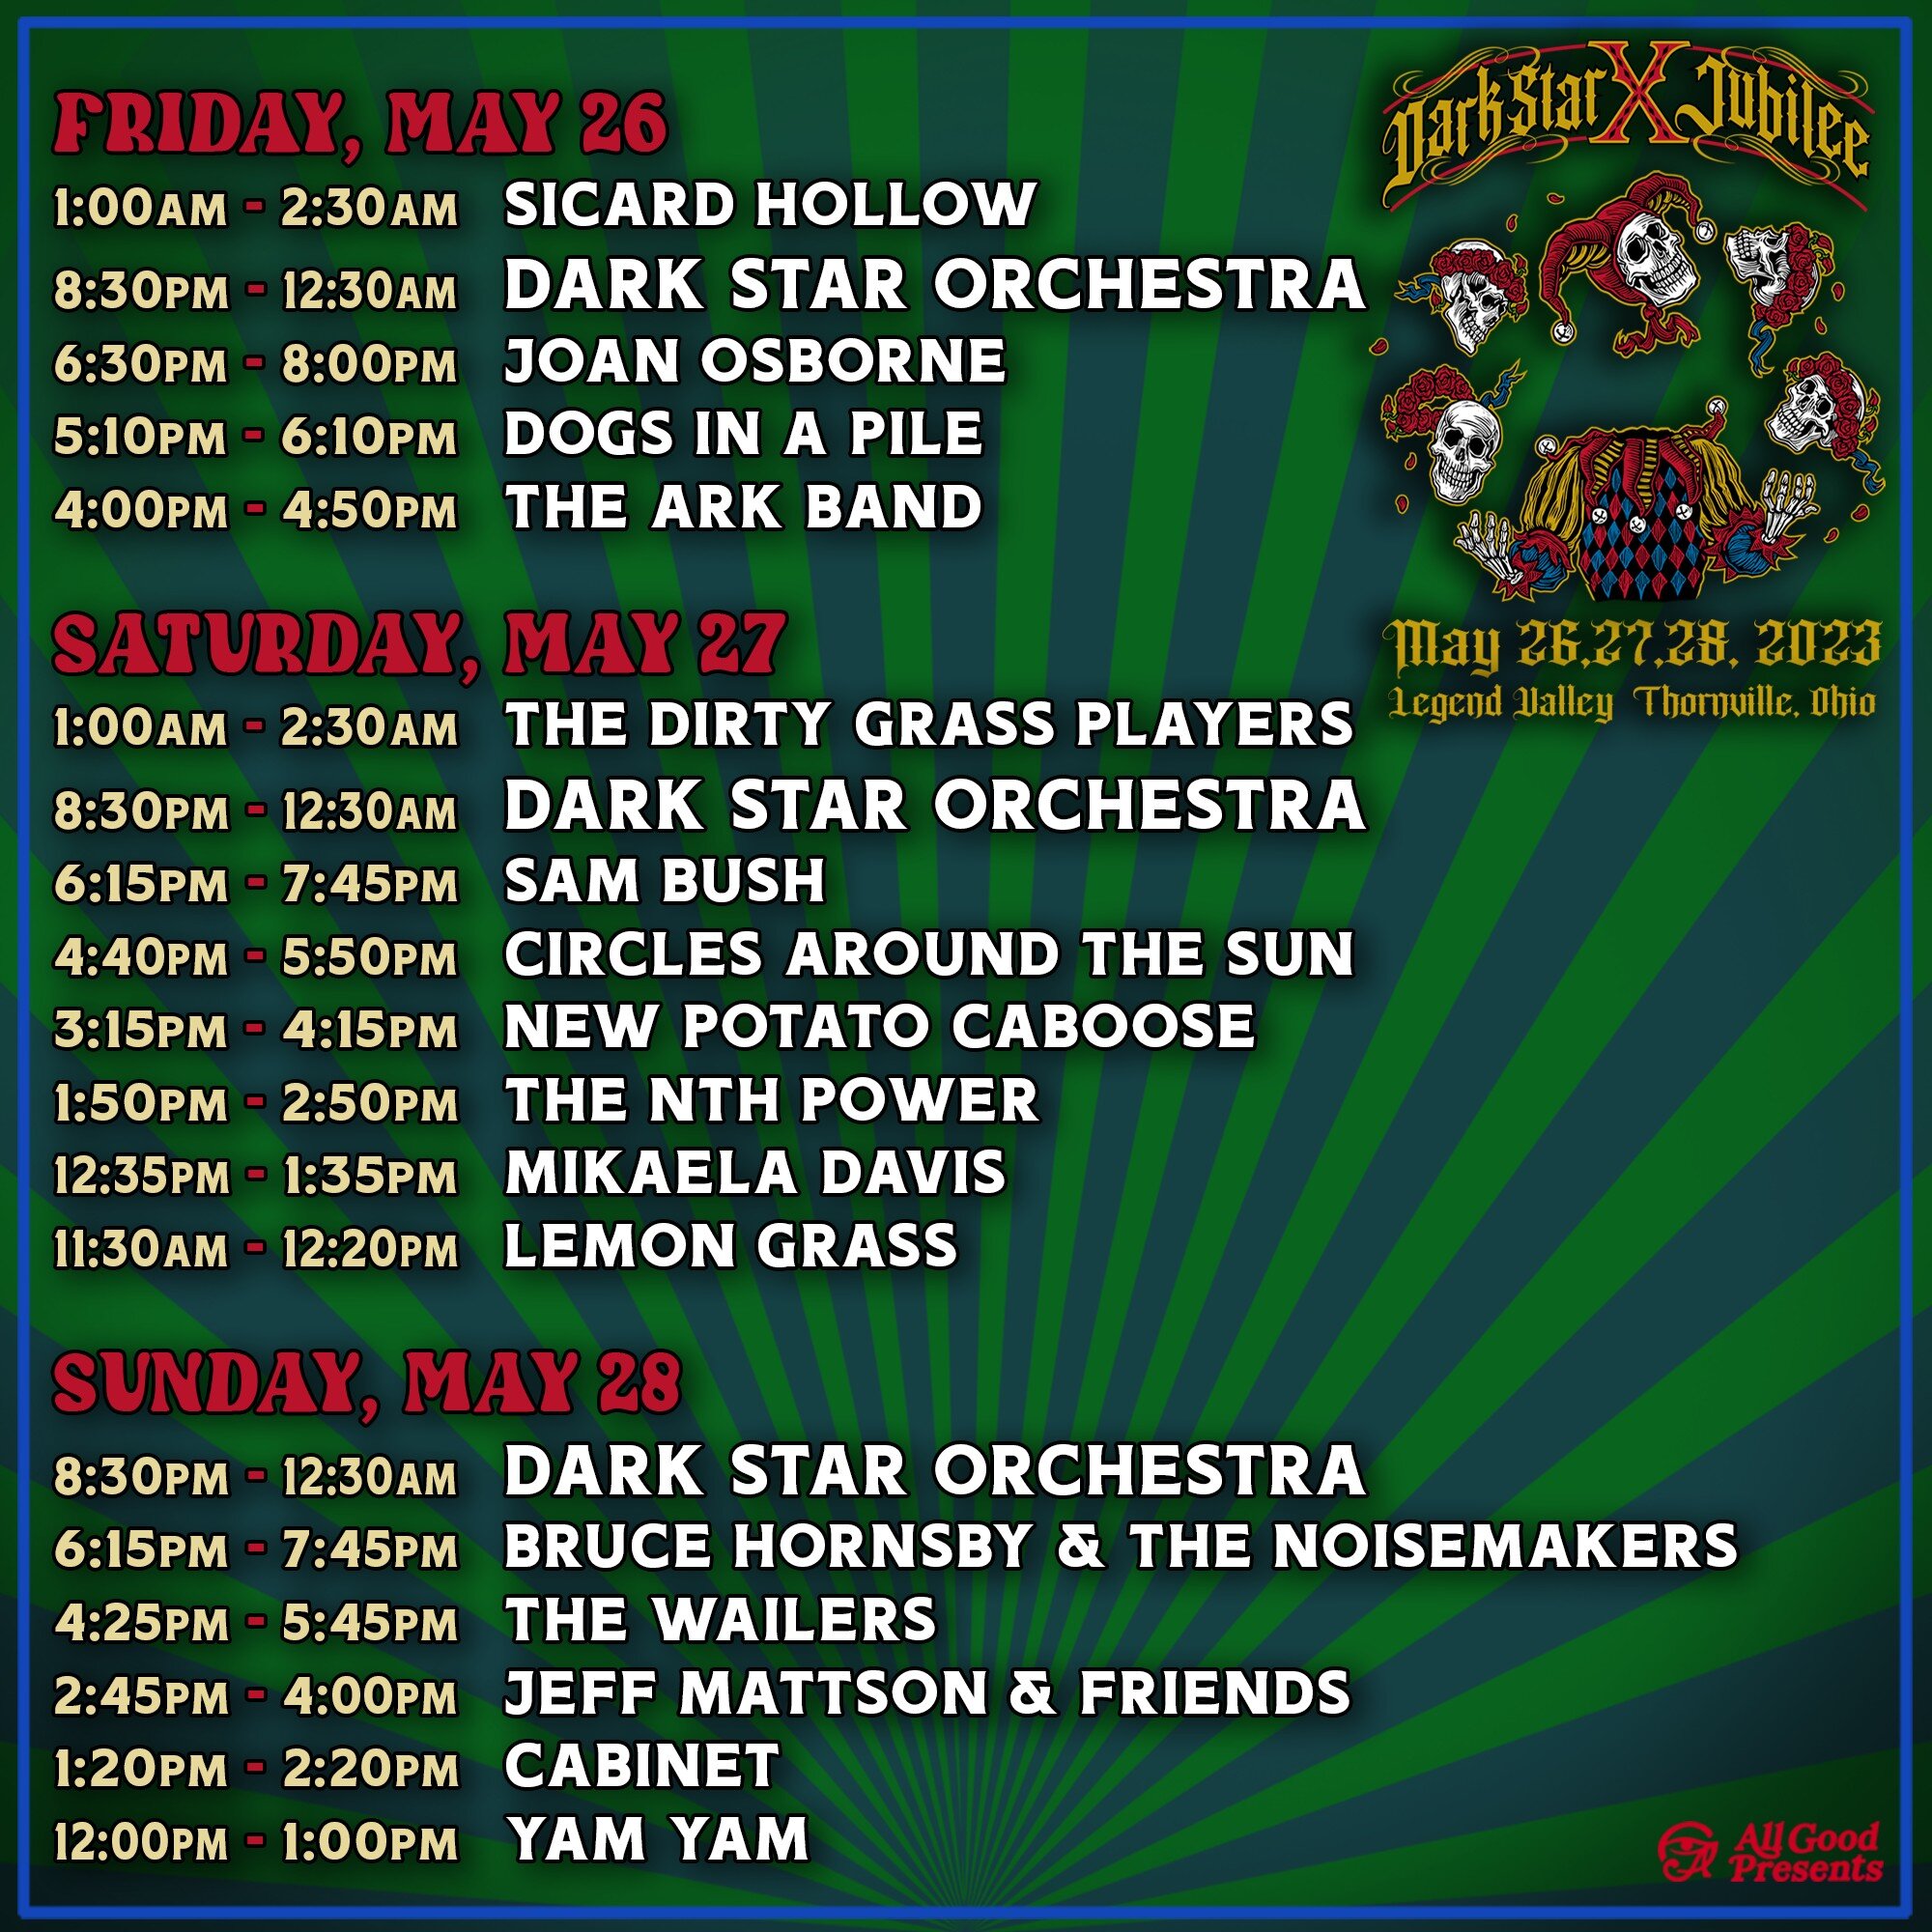 The lineup for @darkstarjubilee is out NOW! 😎

 #jamgrass #livemusic #guitar #bluegrassmusic #touringmusicians #banjo #mandolin #dirtygrass #bass #festivalseason #festivals #latenightset